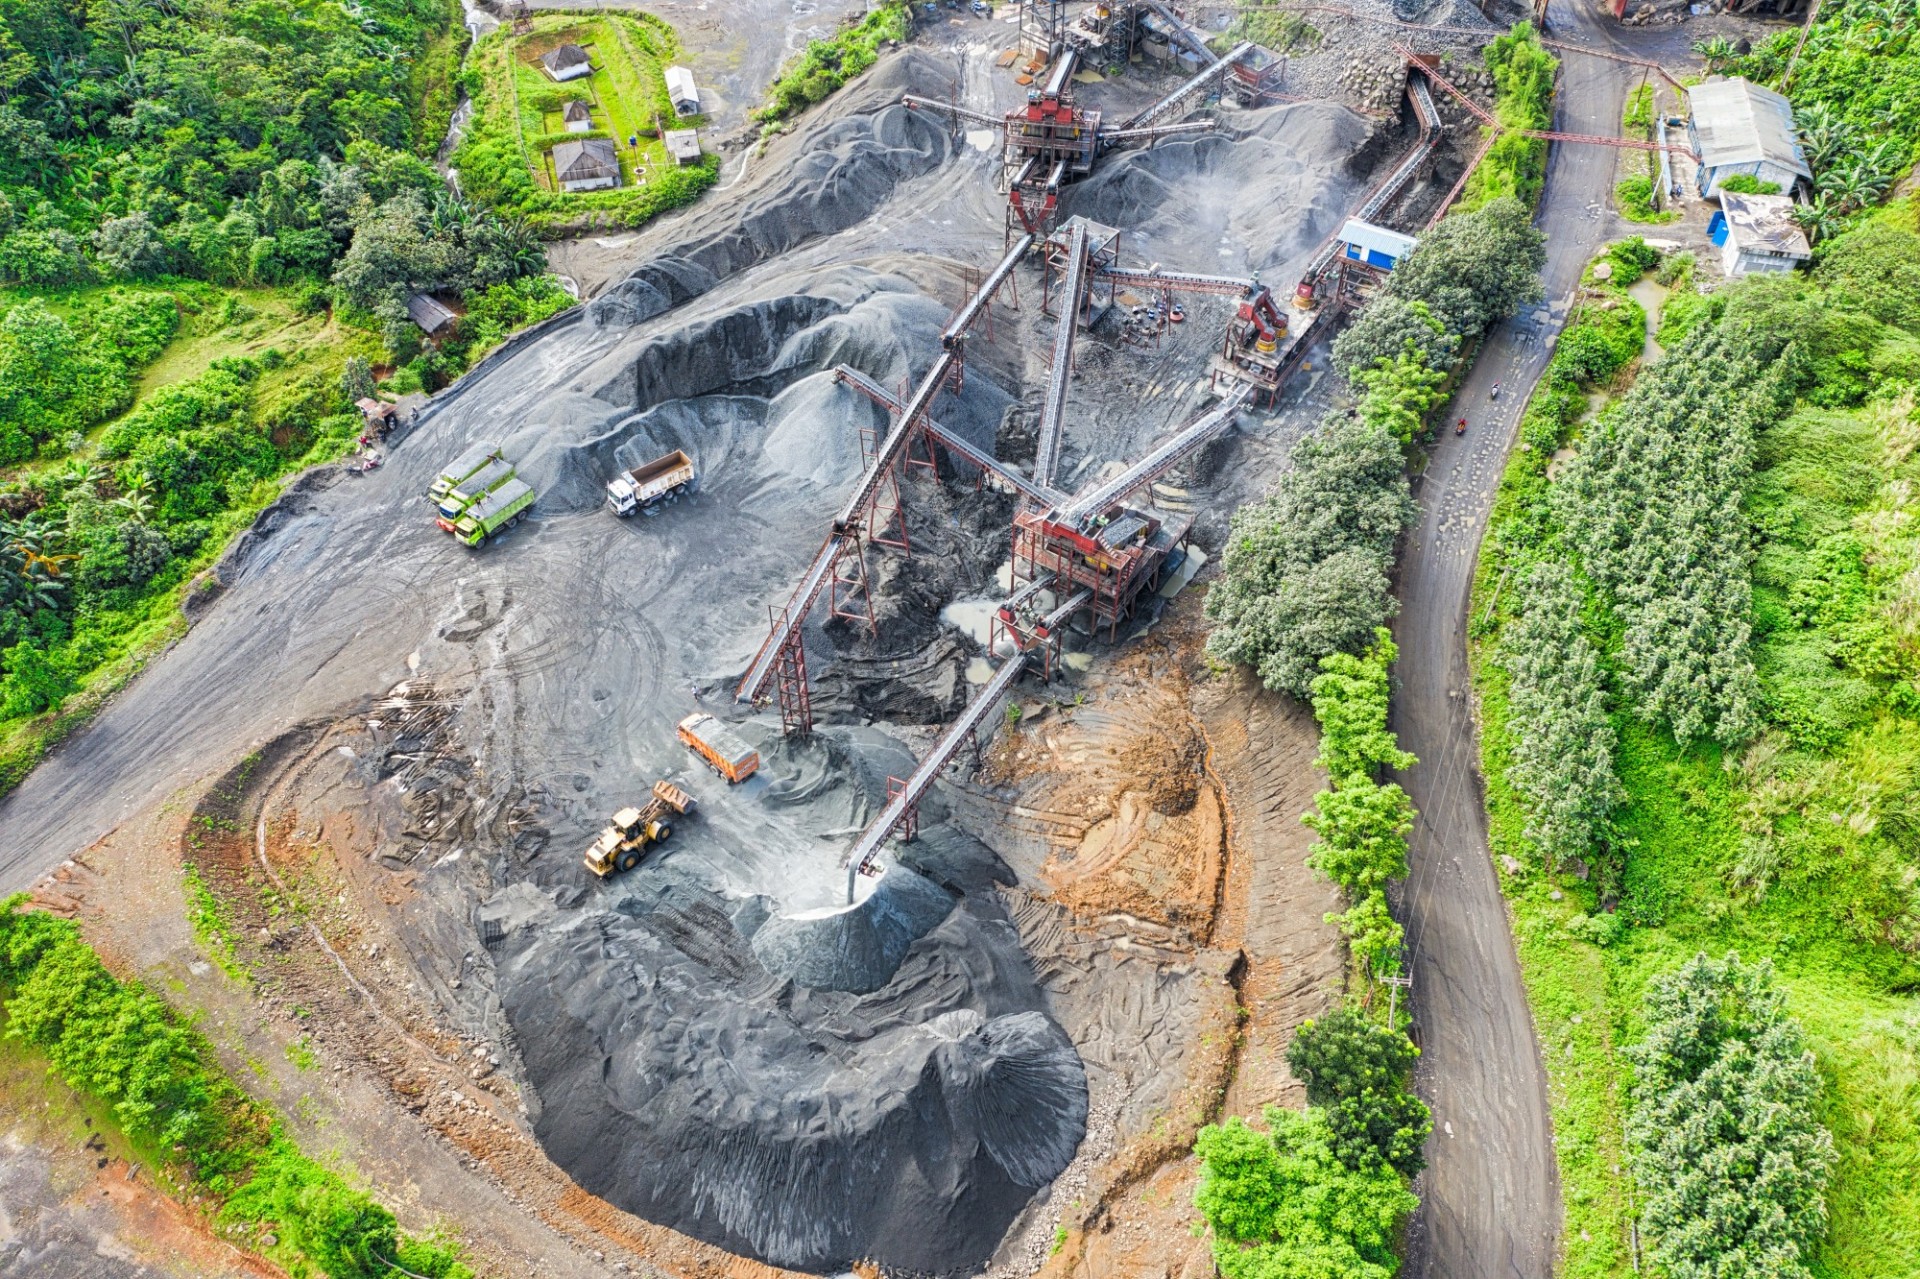 Bird's eye view of heavy mining equipment in use